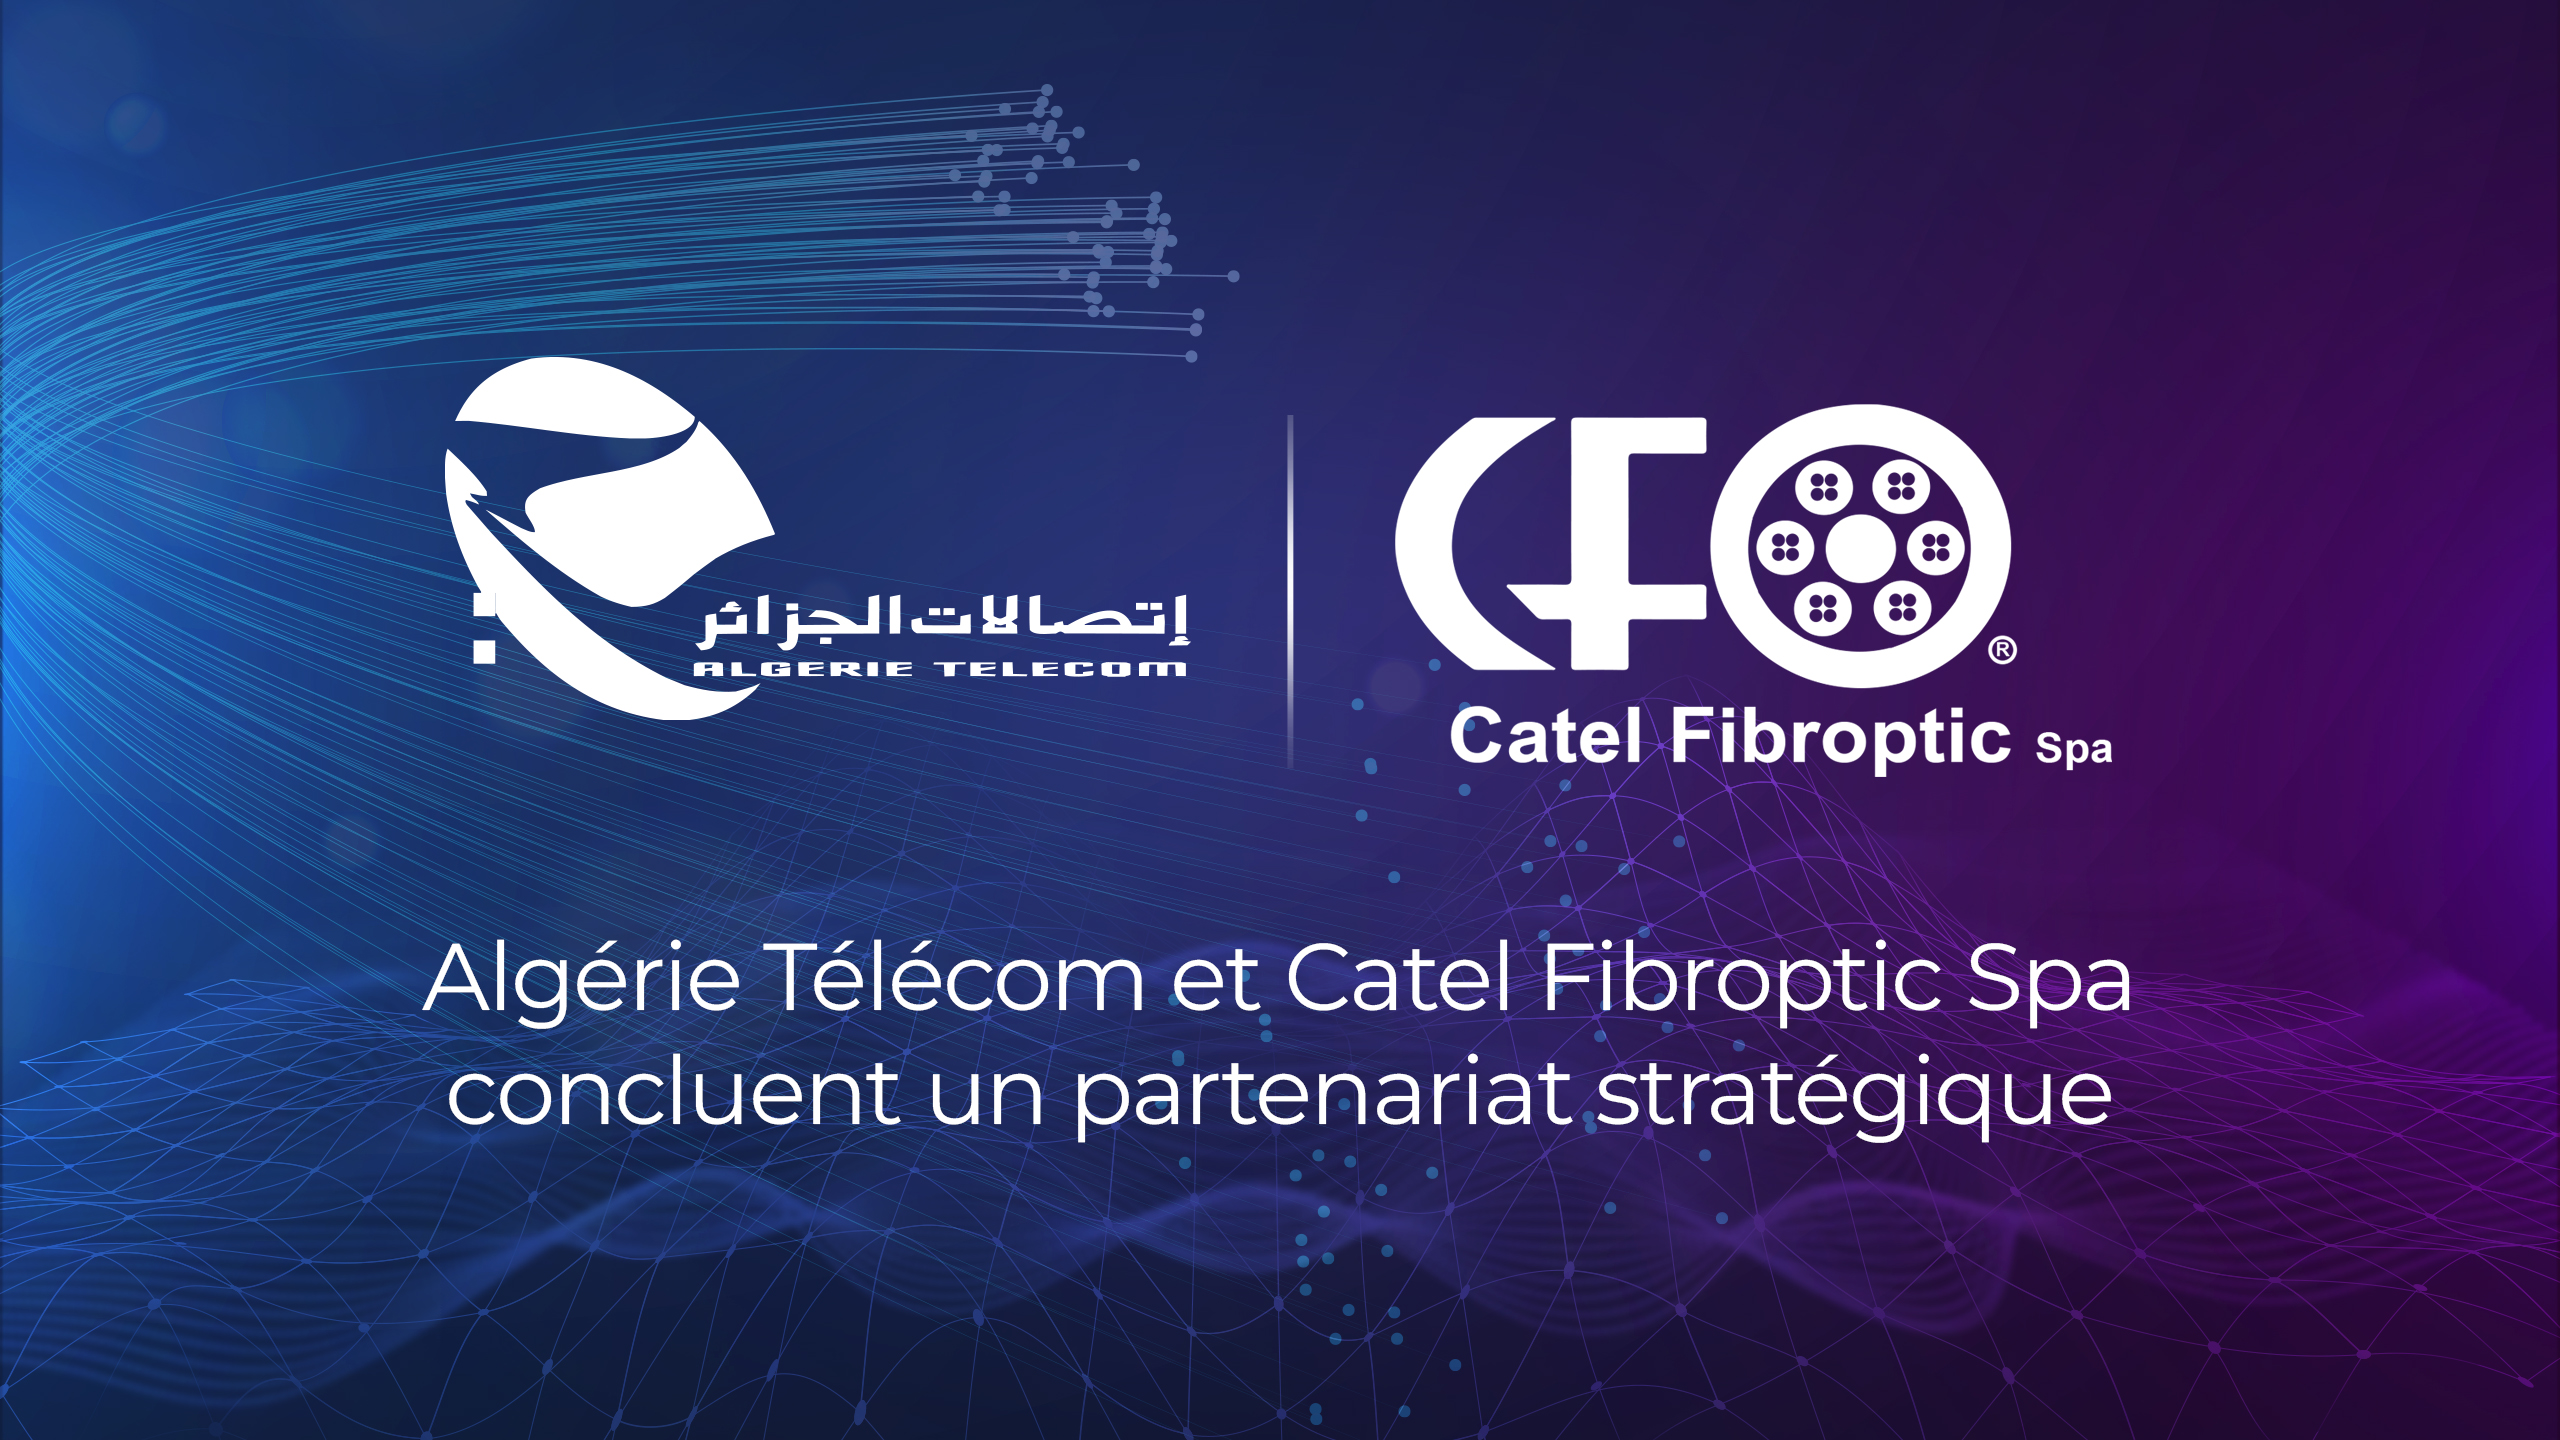 Algeria Telecom and CATEL FIBROPTIC sign a strategic partnership agreement